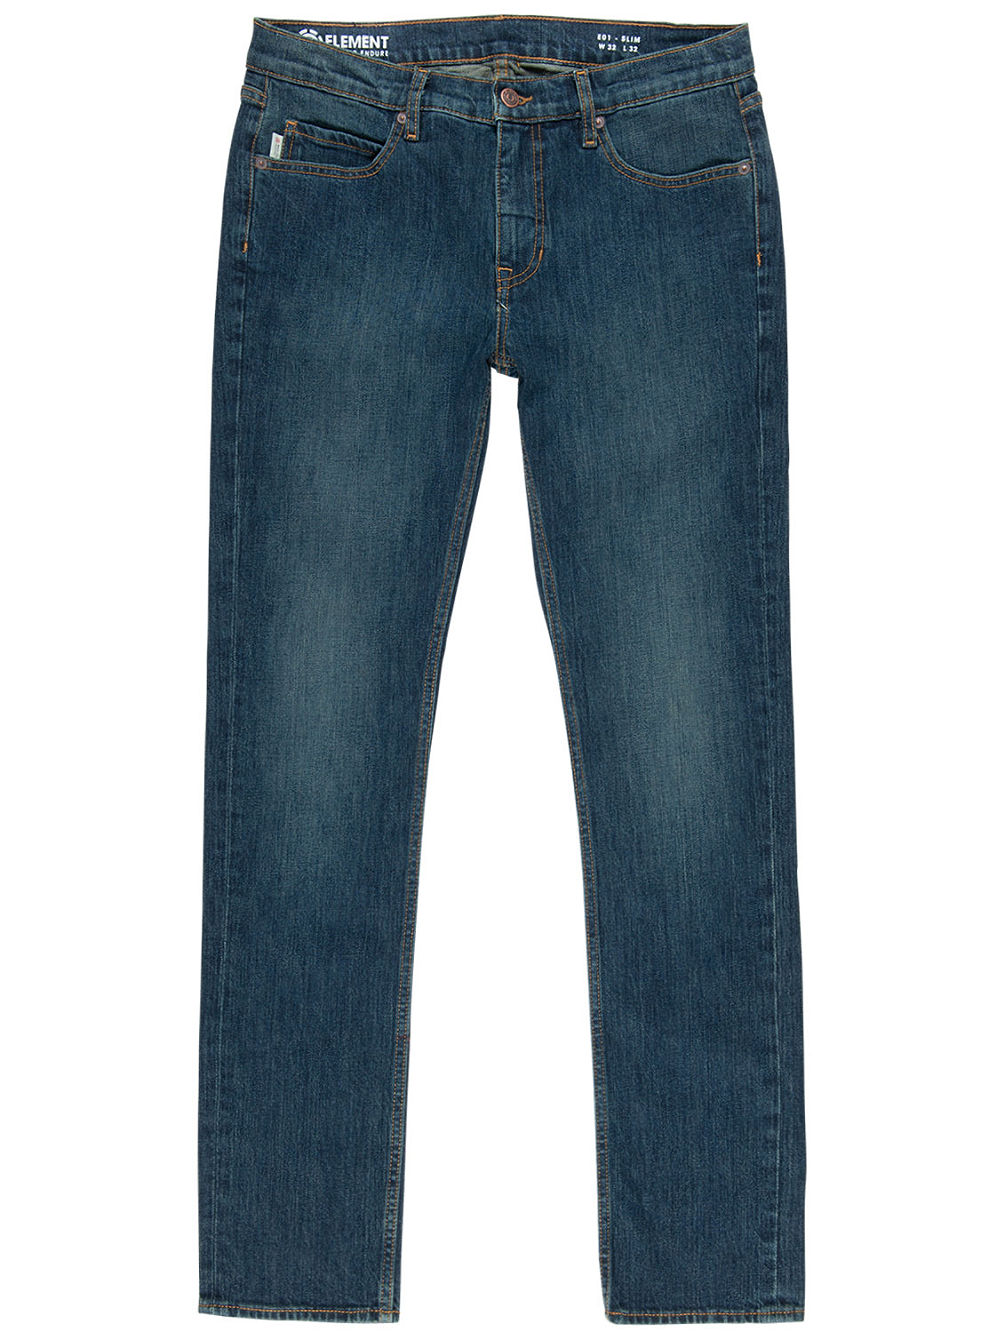 E01 Jeans